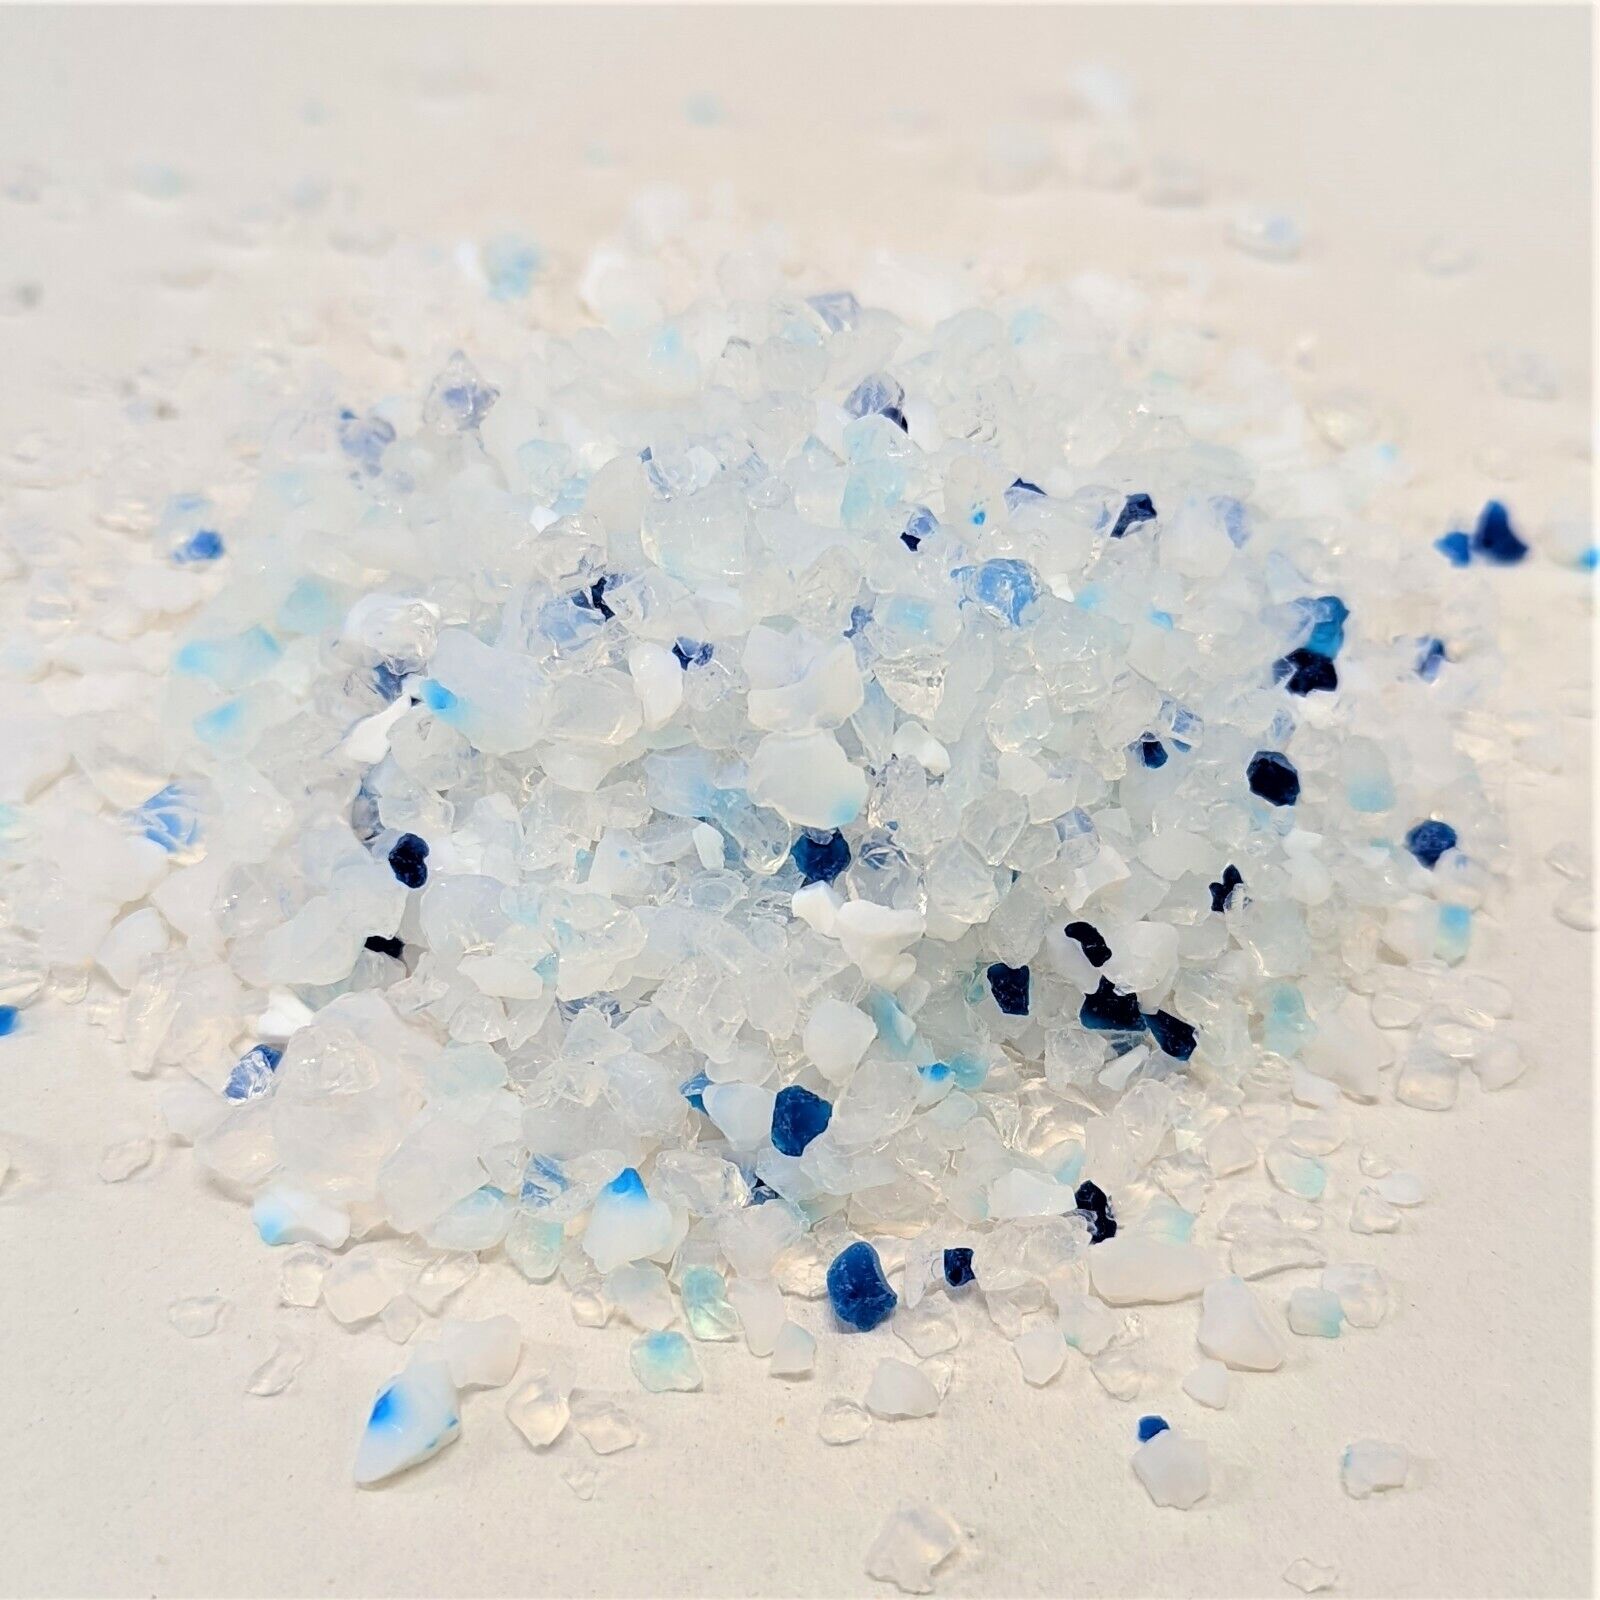 5Pc Silica Crystals Cat Litter 3.8L Comfort Non Clumping Natural & Biodegradable